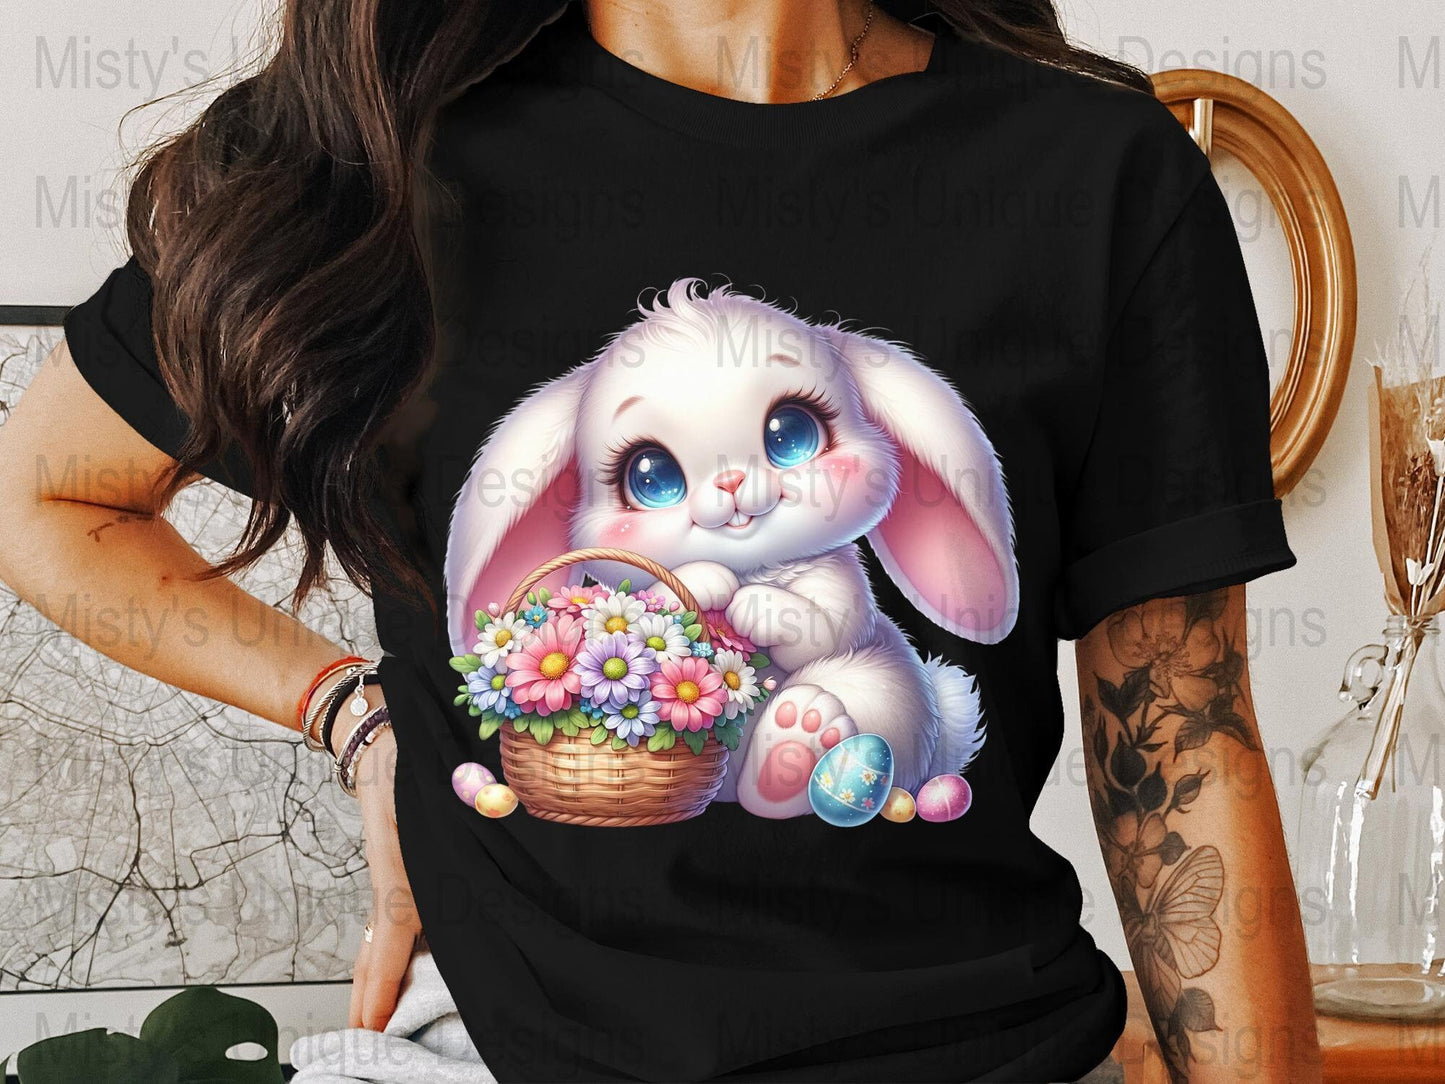 Cute Bunny Clipart PNG, Digital Download, Easter Basket Flowers, Cartoon Rabbit Illustration, Kids Printable Art, Craft Supplies Design